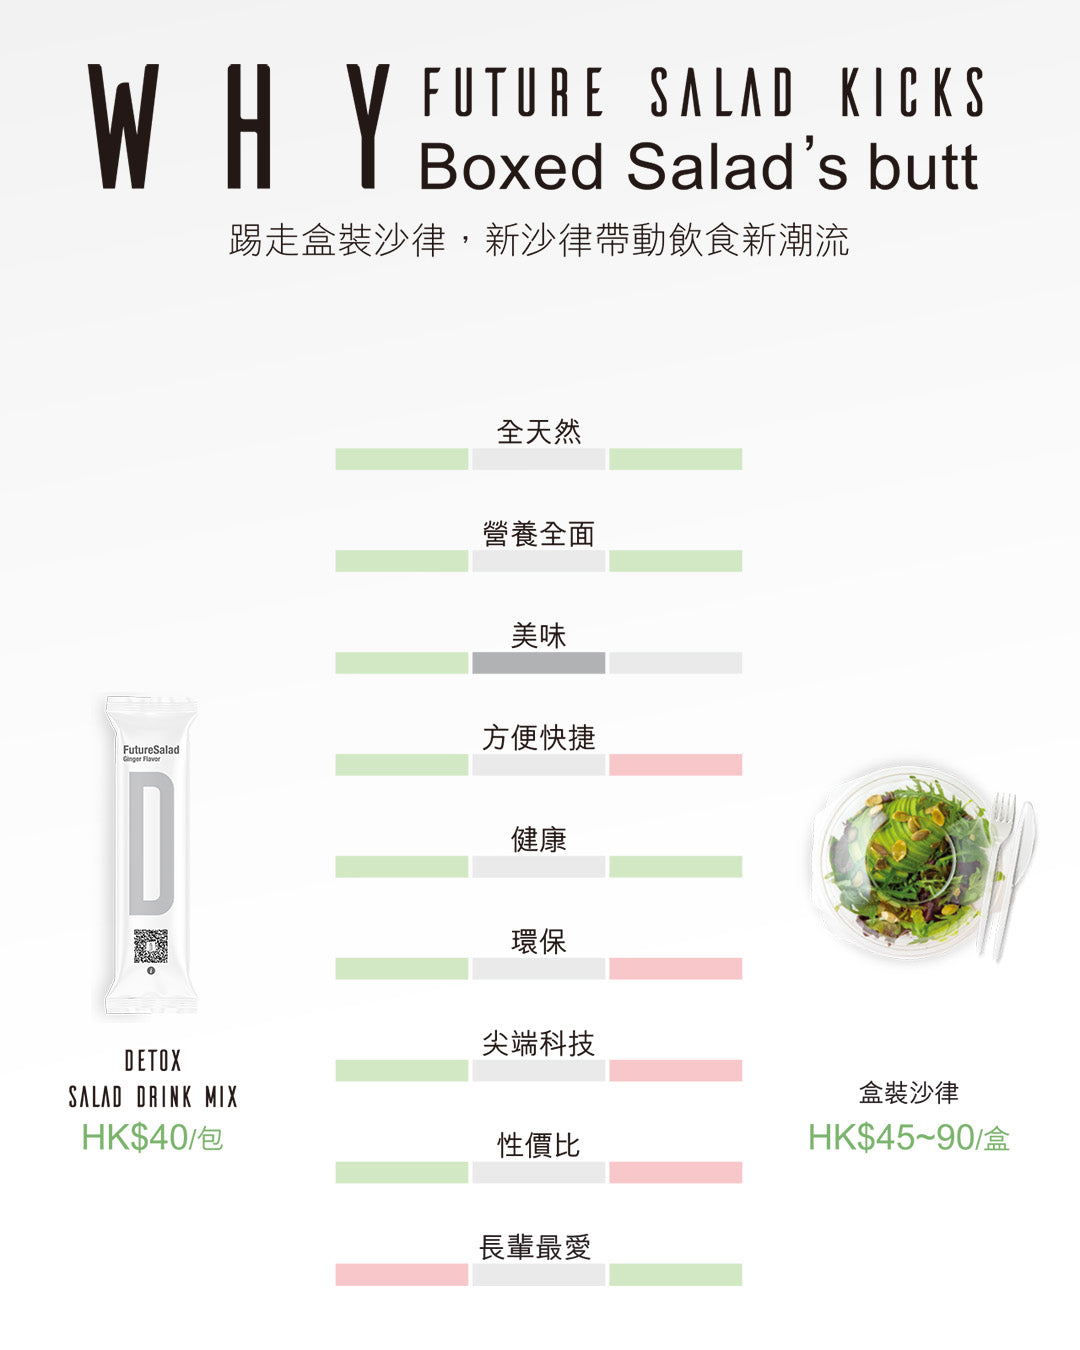 Why future salad